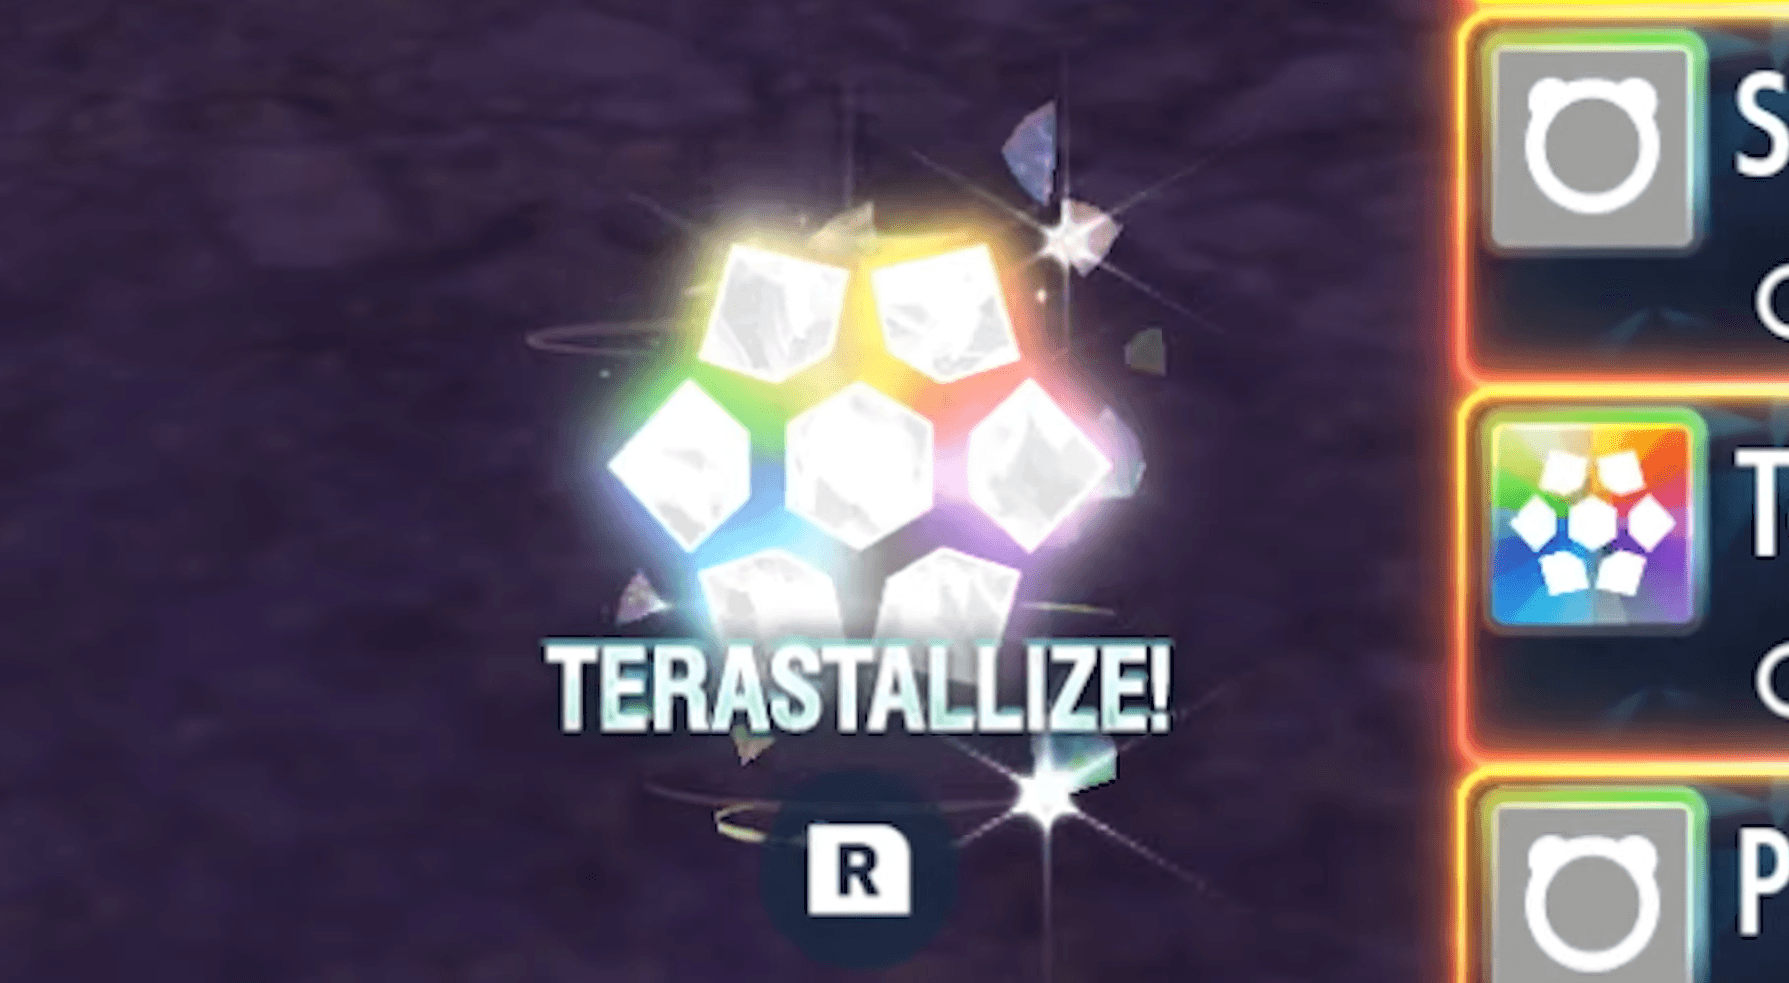 A new Terastallization icon